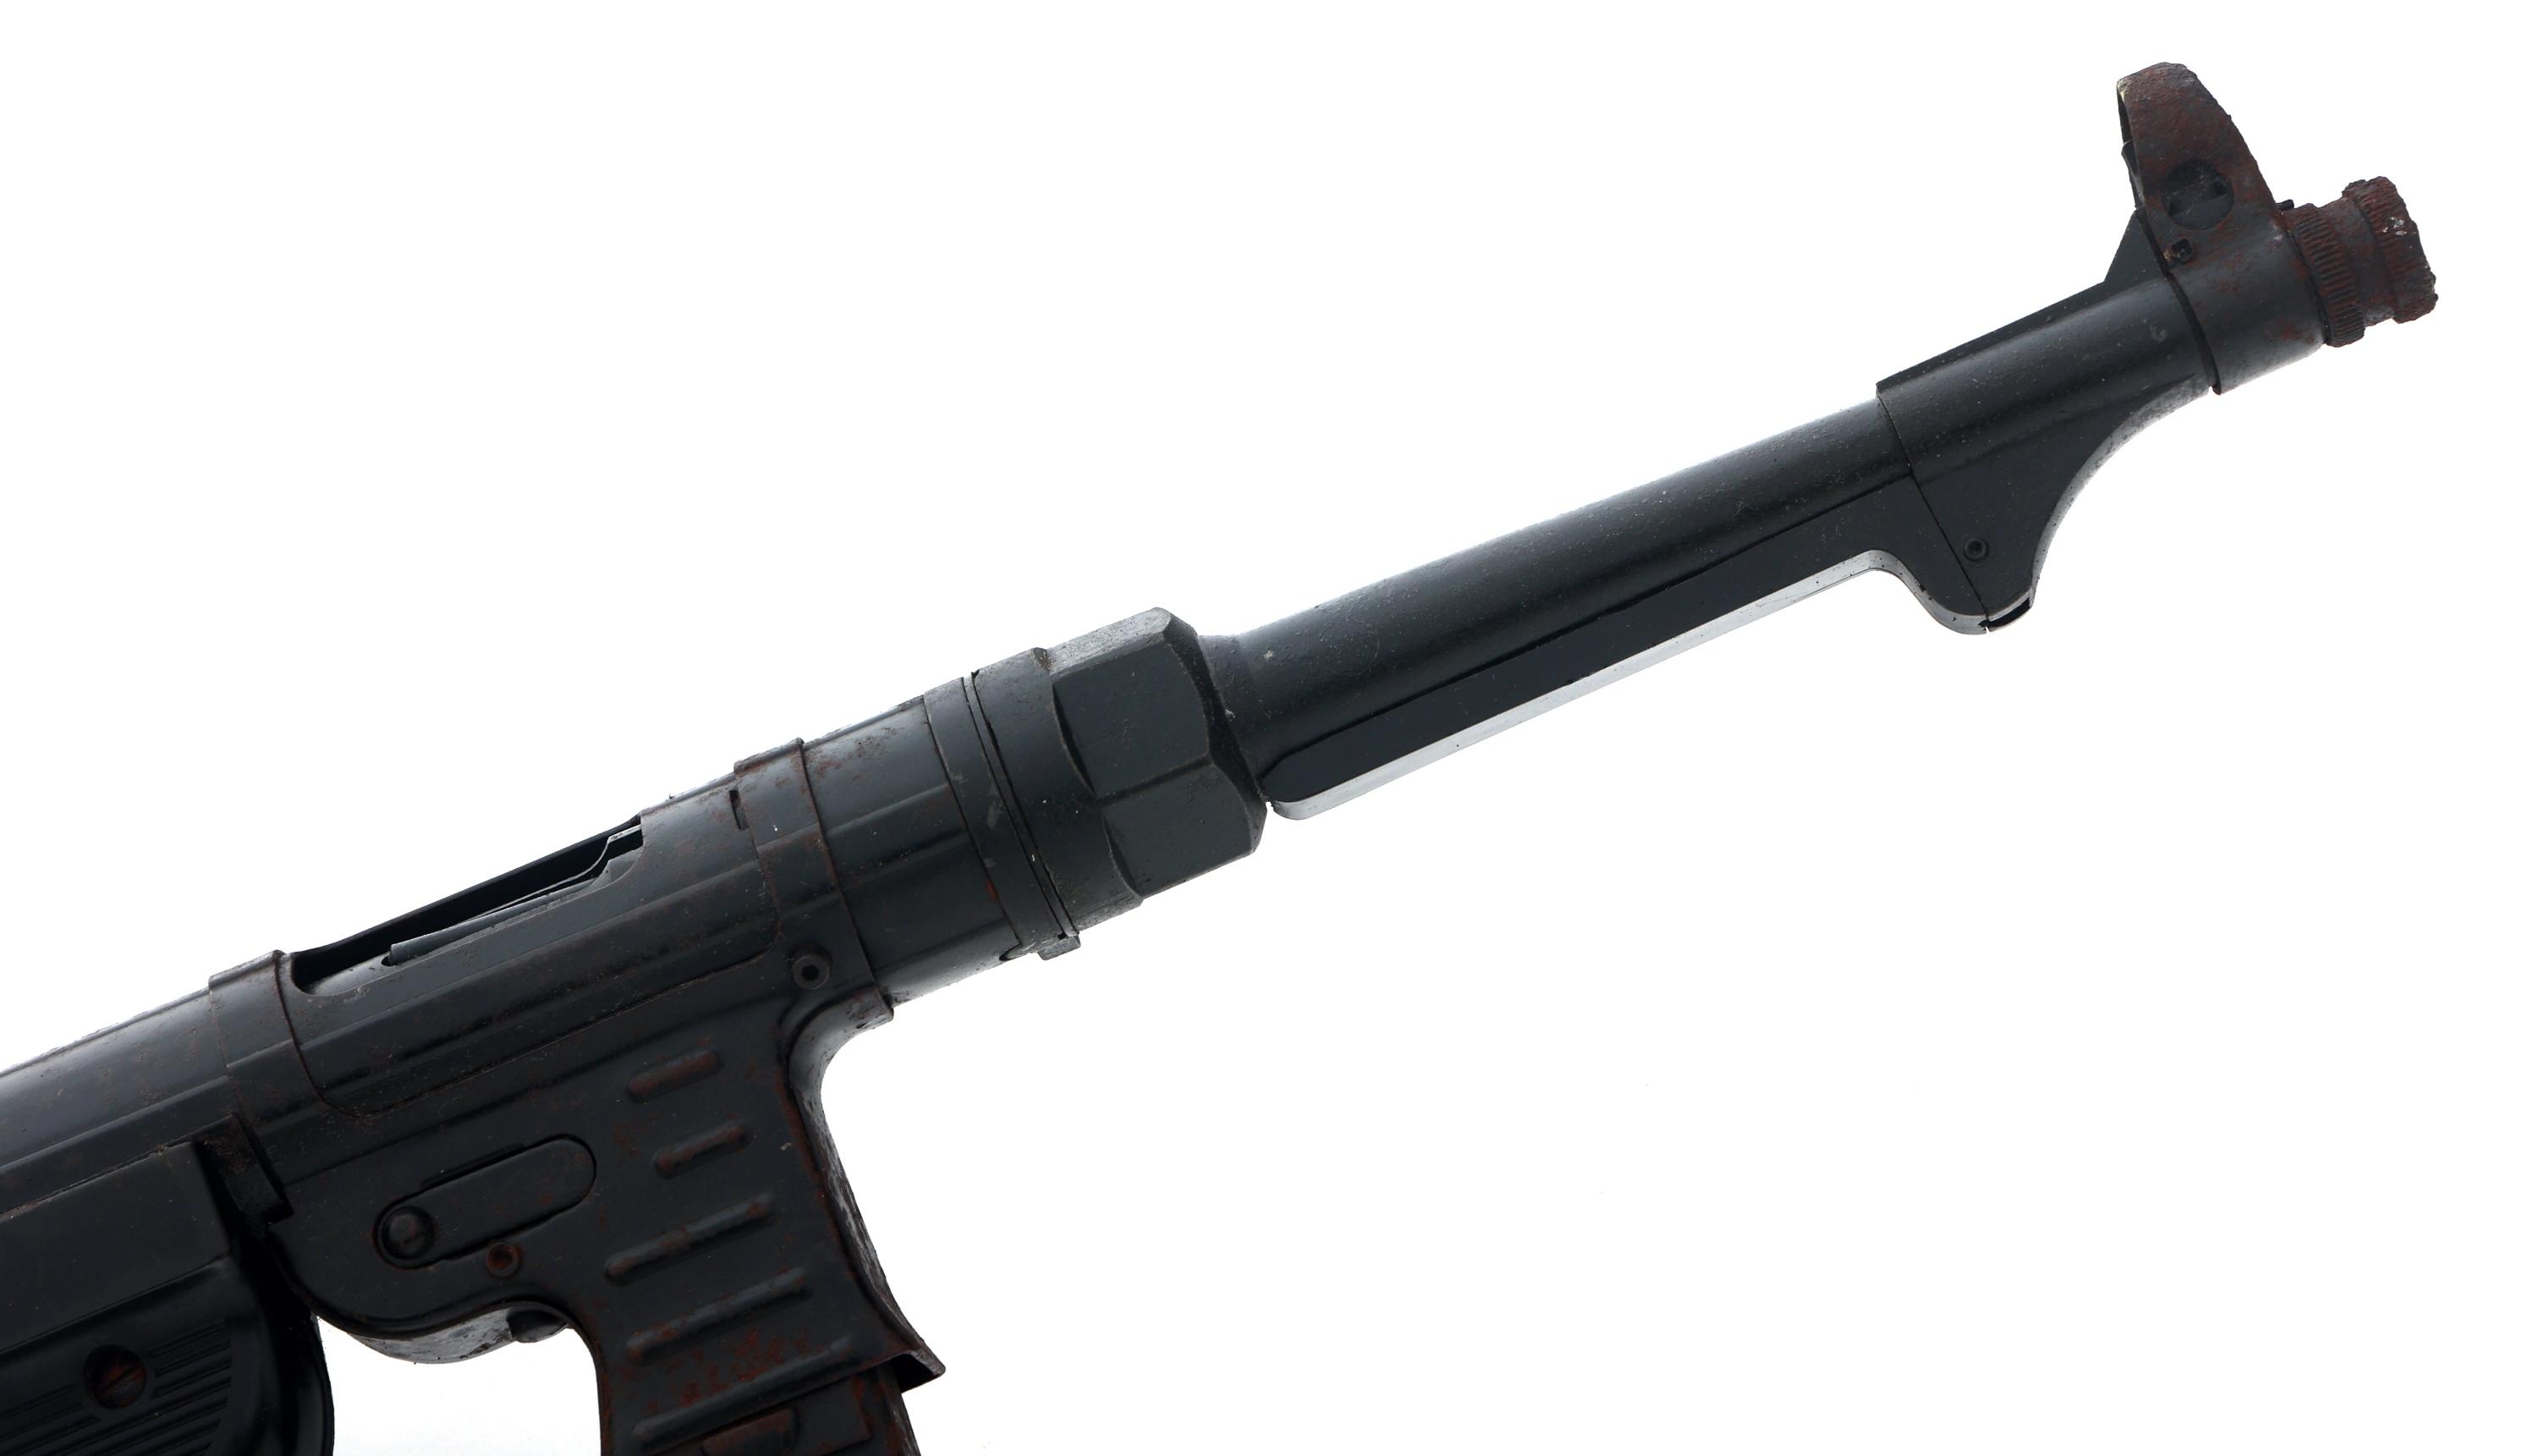 MGC 68 MODEL MP40 MACHINE GUN DISPLAY MODEL